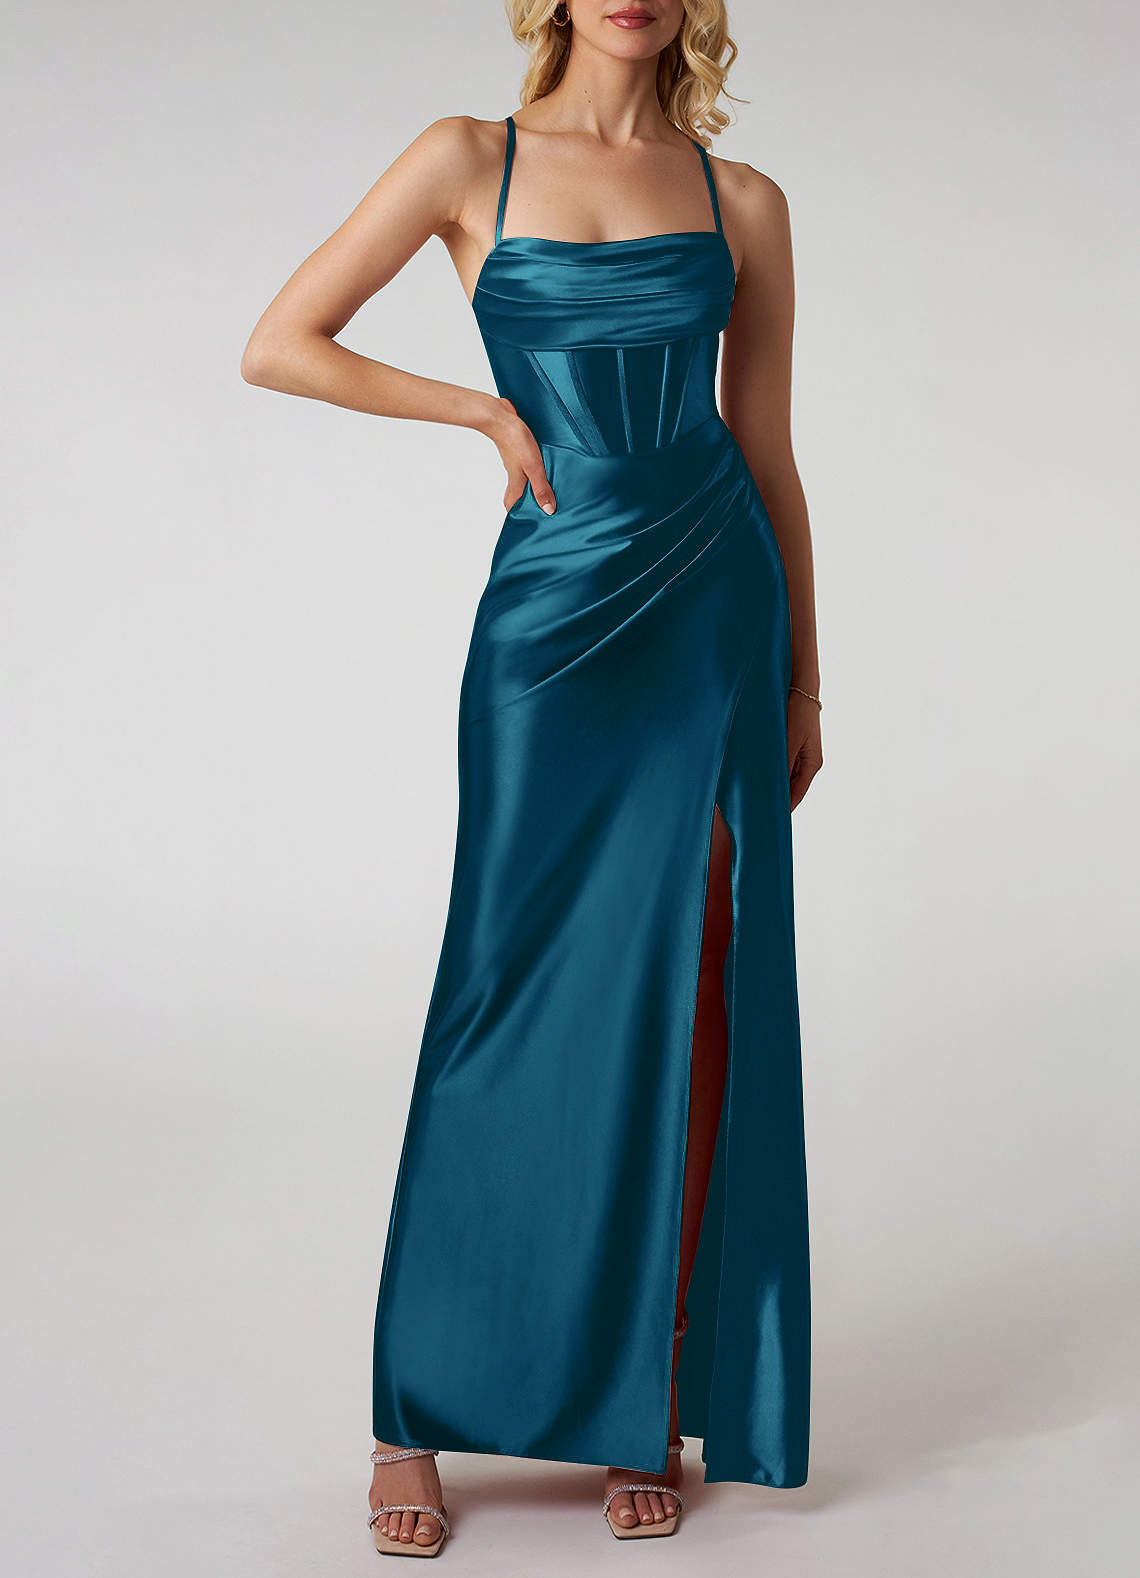 Teal Blue Modely Jacquard Square Neck Puff Sleeve Dress Sz XS S M L XL |  eBay